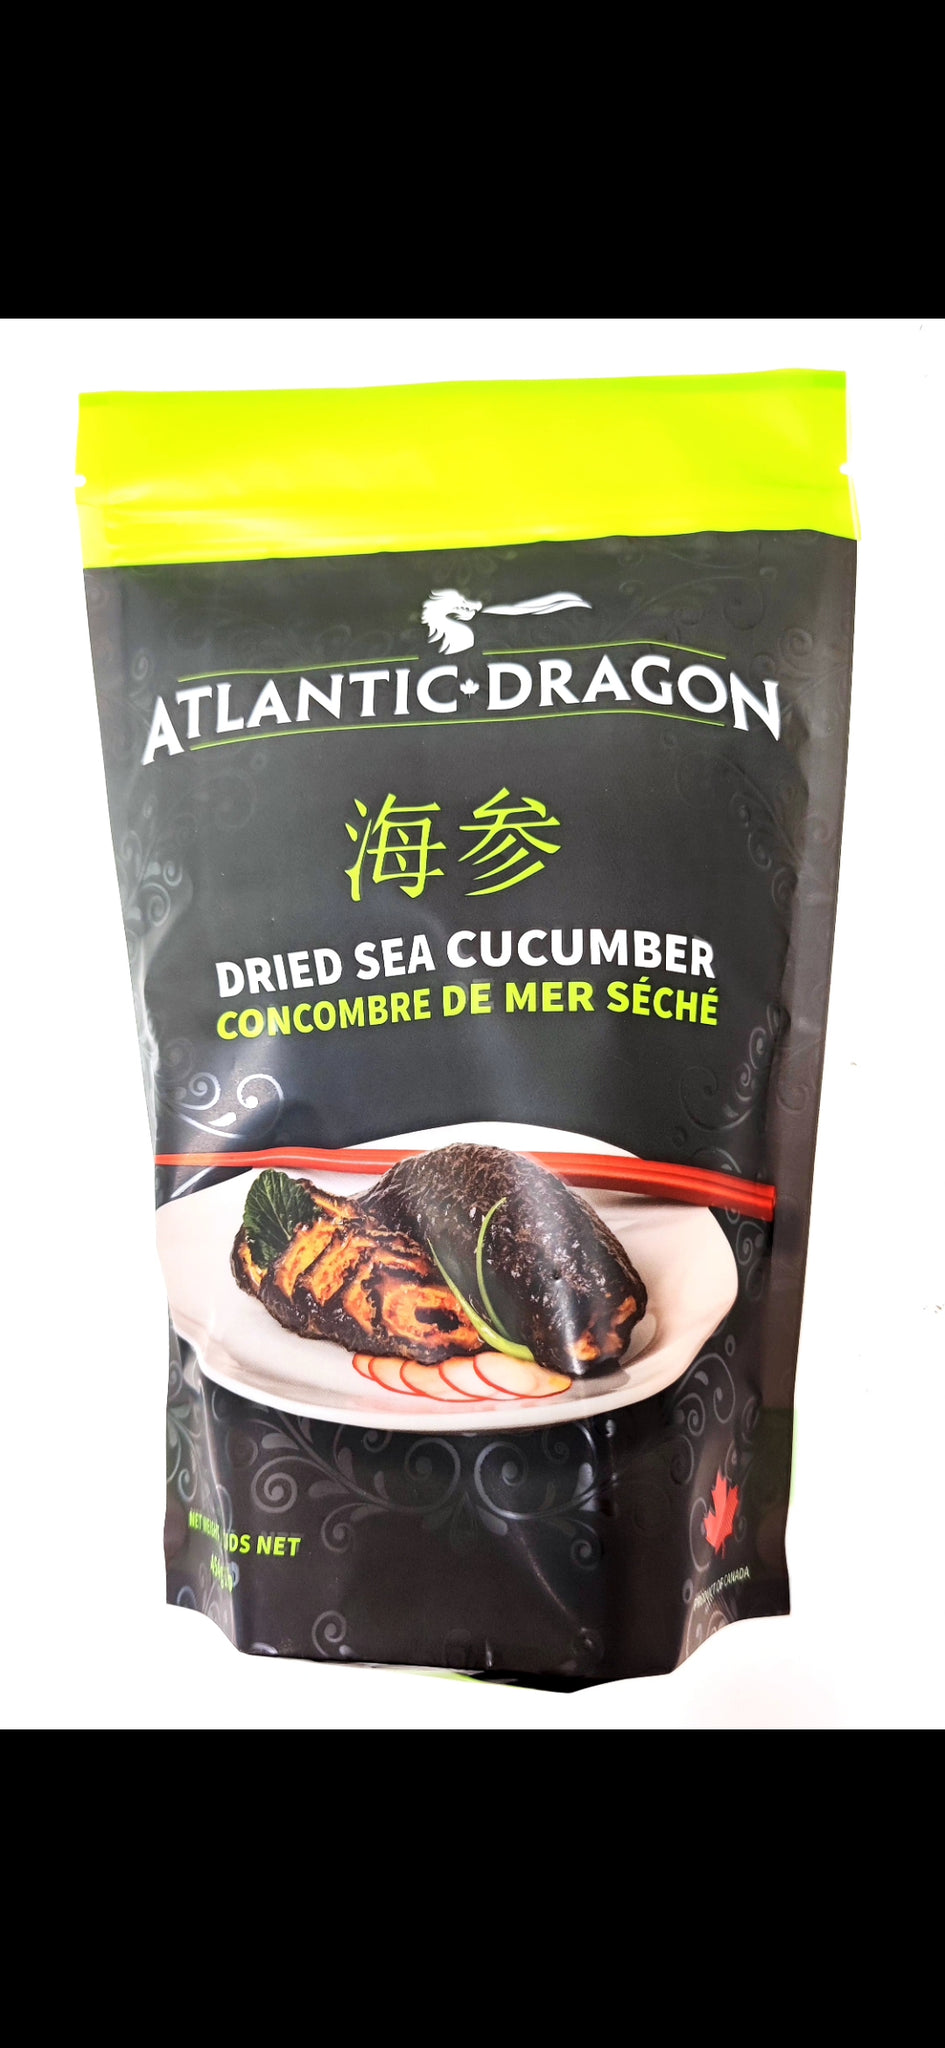 Atlantic Dragon dried sea cucumber 454g